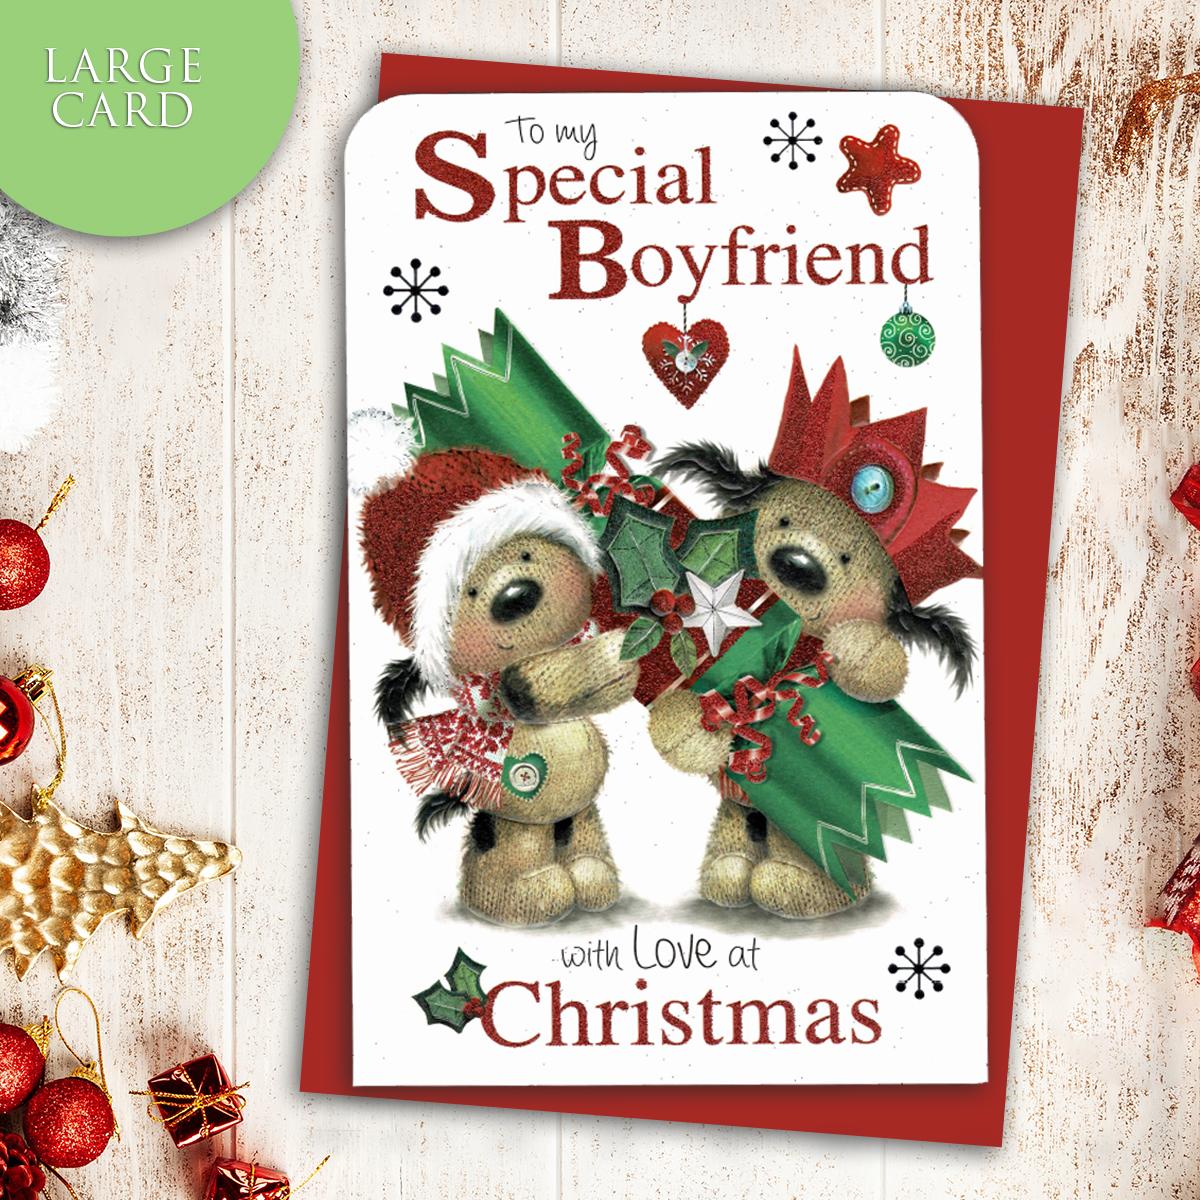 Special Boyfriend Christmas Card Alongside Its Red Envelope